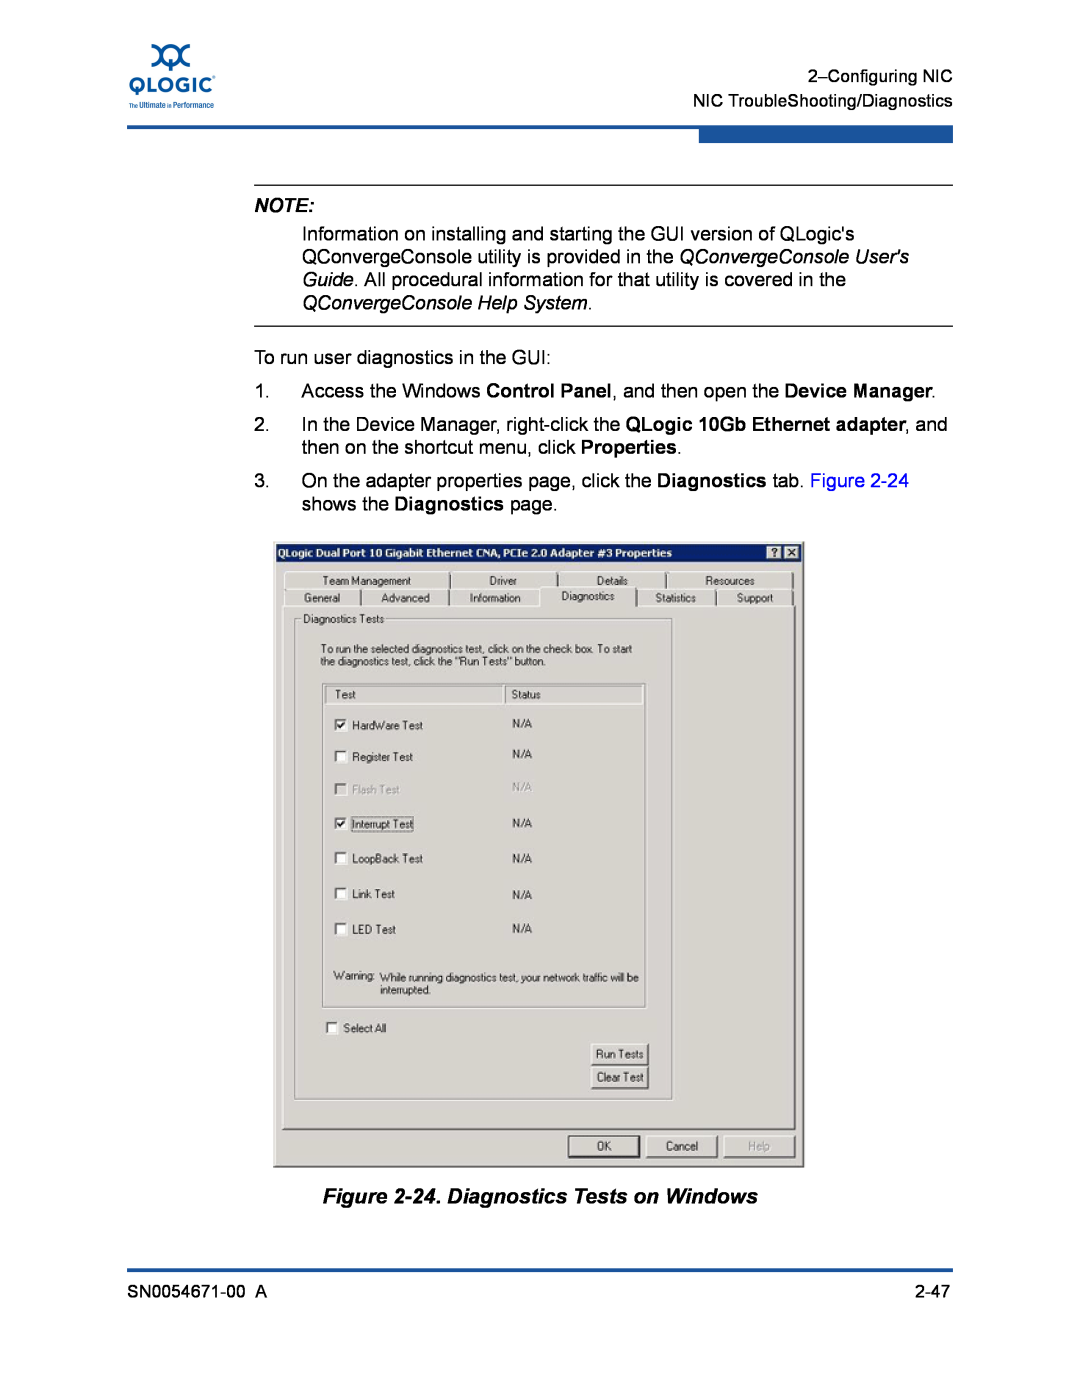 Q-Logic 3200, 8200 manual 24. Diagnostics Tests on Windows 